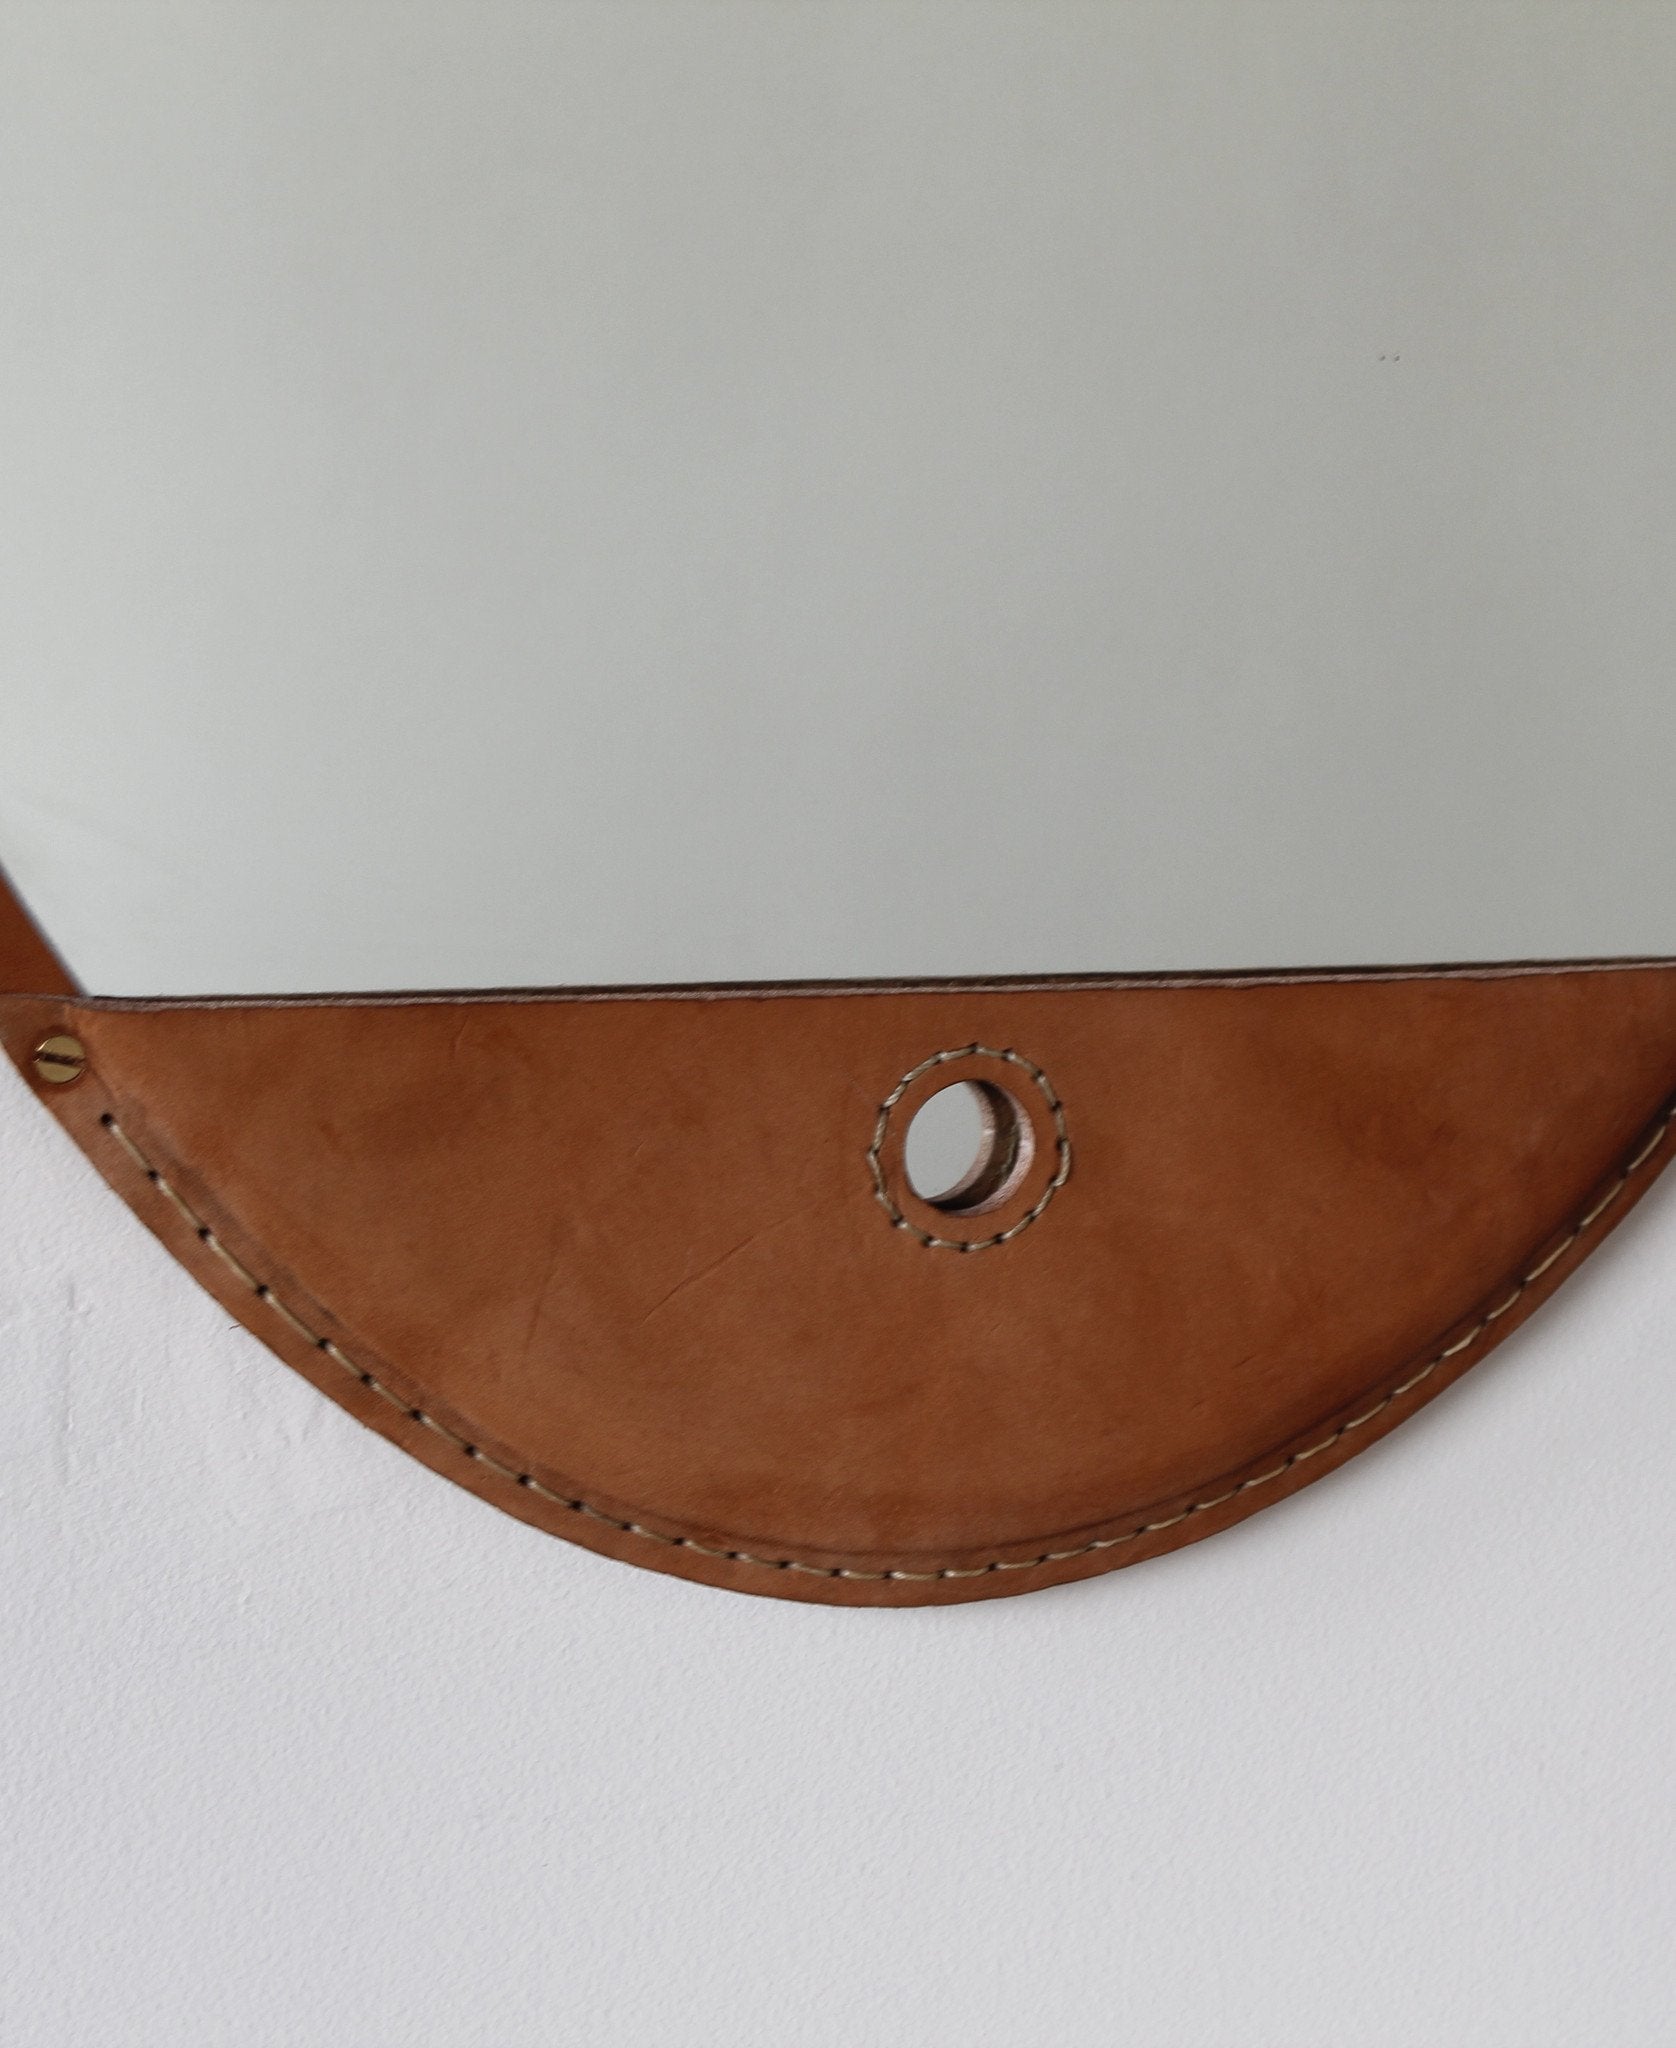 Lostine fairmount leather frame mirror long oval